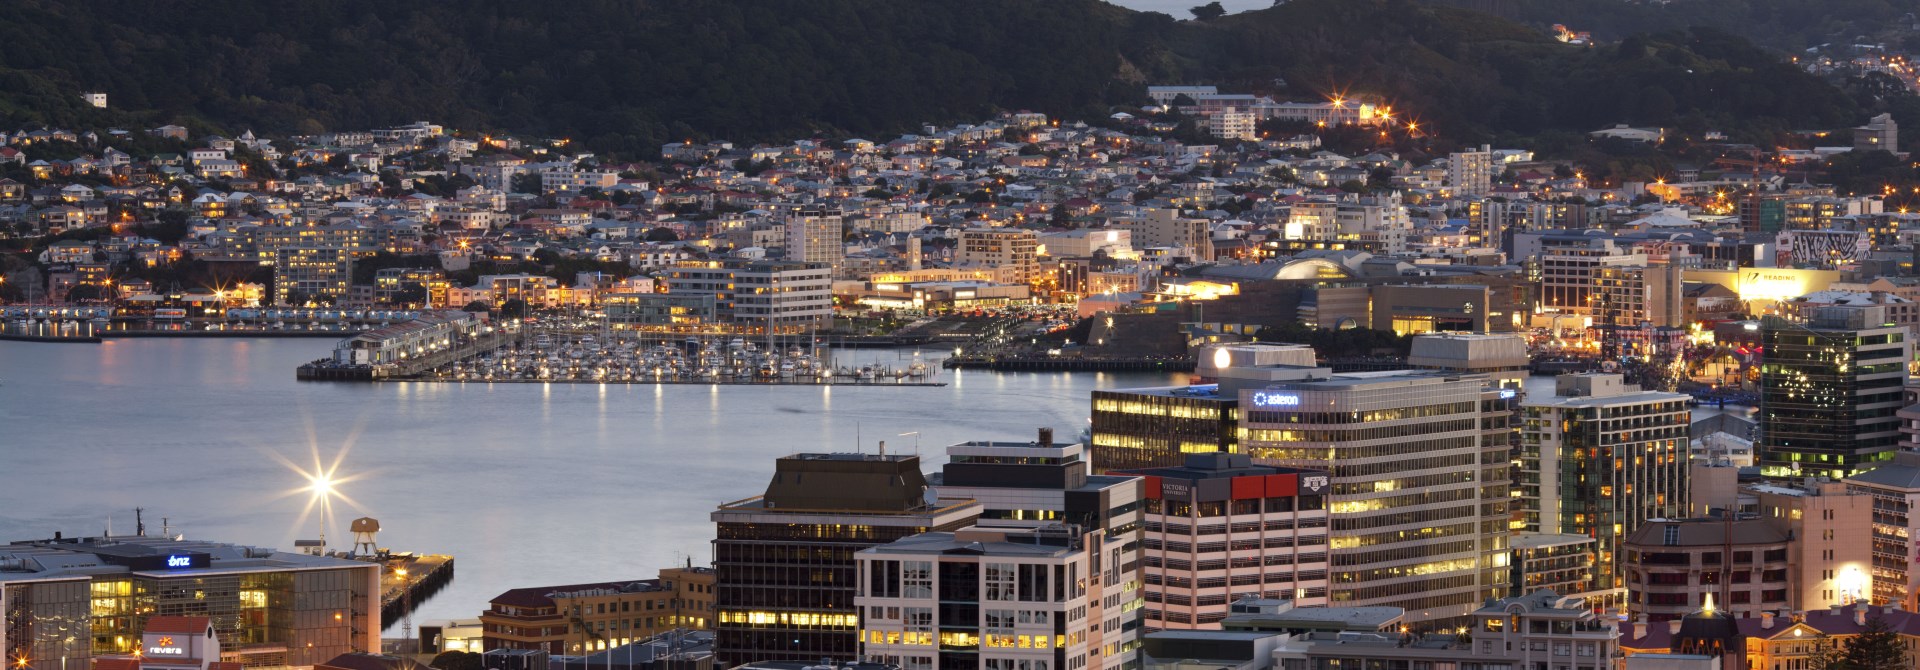 Wellington city centre lit up at night.